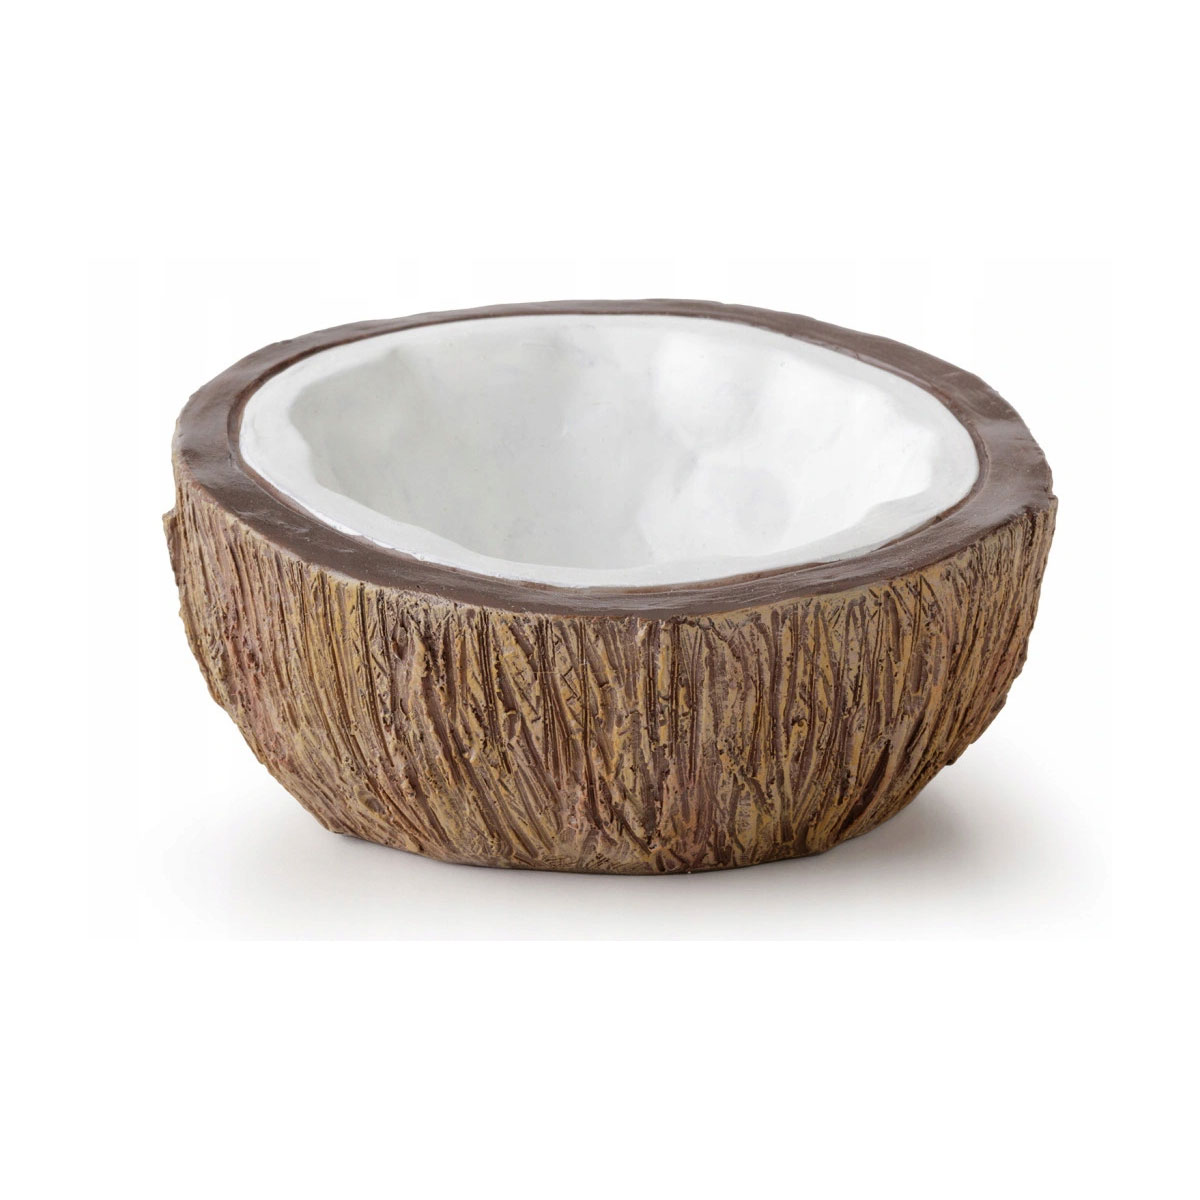 Поилка для террариума Hagen ExoTerra Water Dishes Coconut, Кокос, пластик, 10?4.5 cм